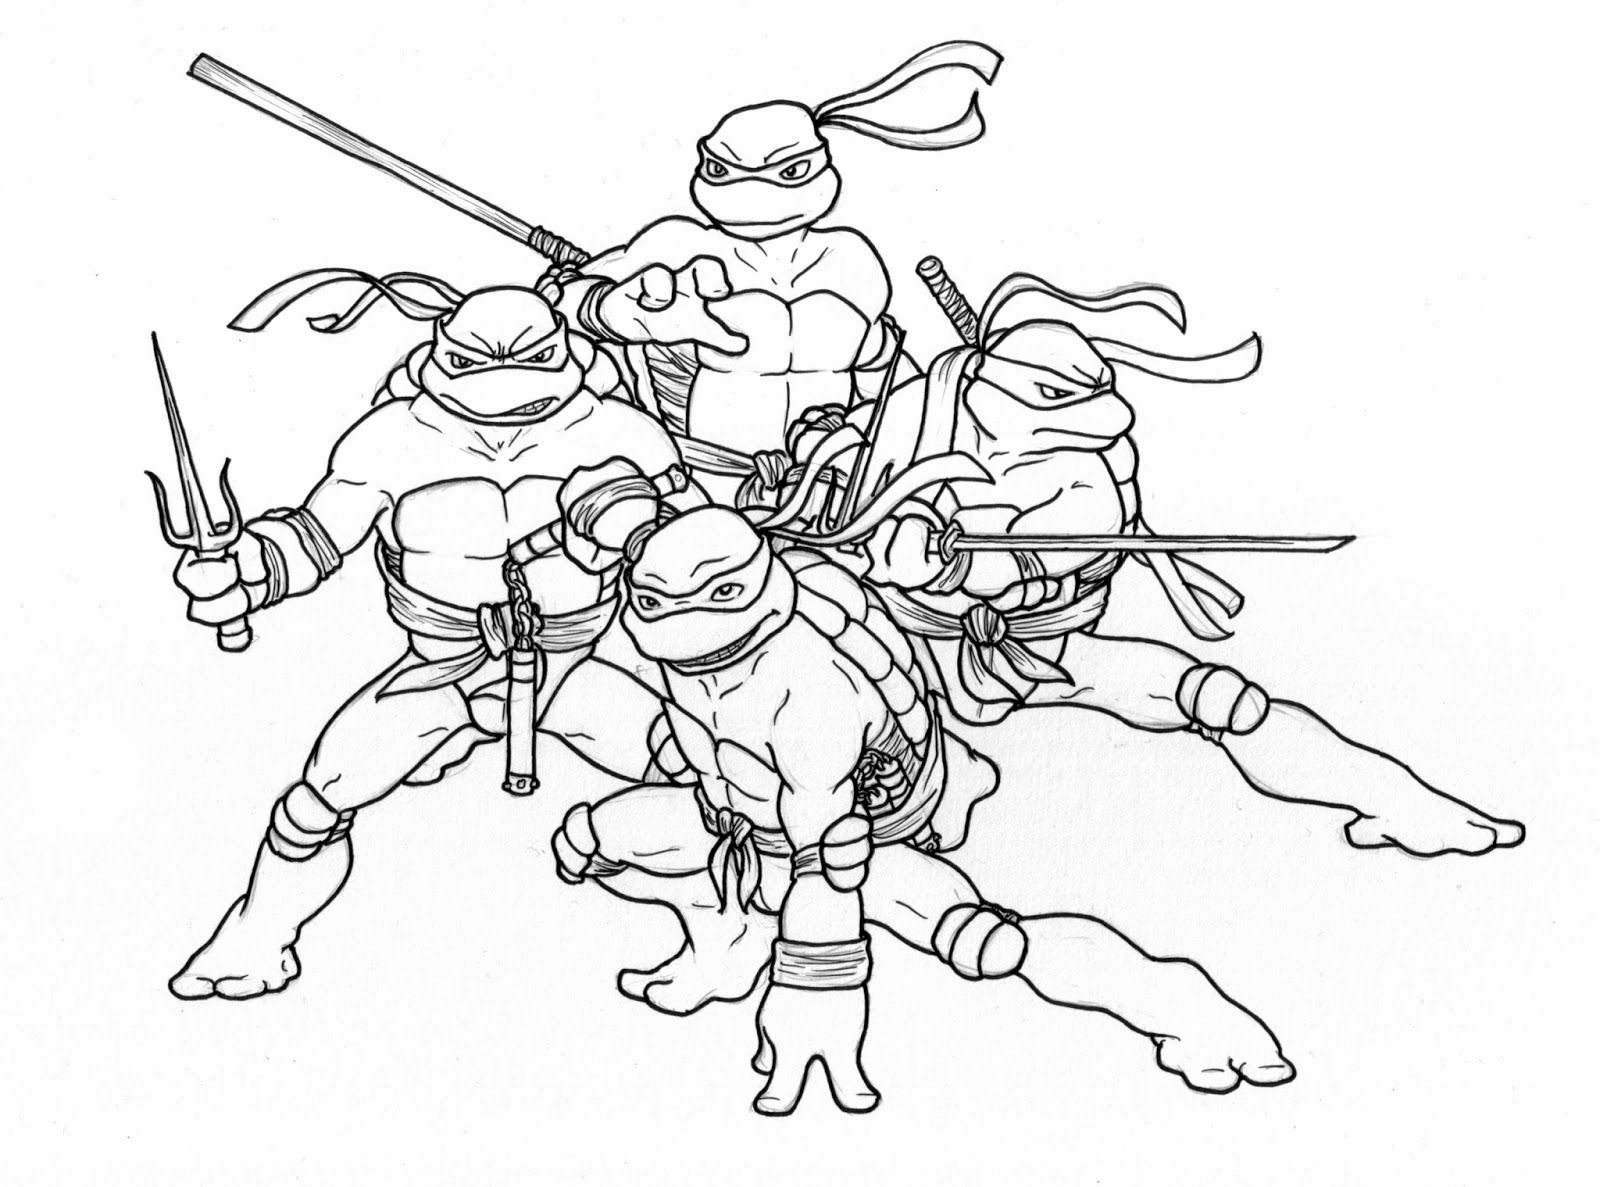 Coloring Pages Teenage Mutant Ninja Turtles - Coloring Home